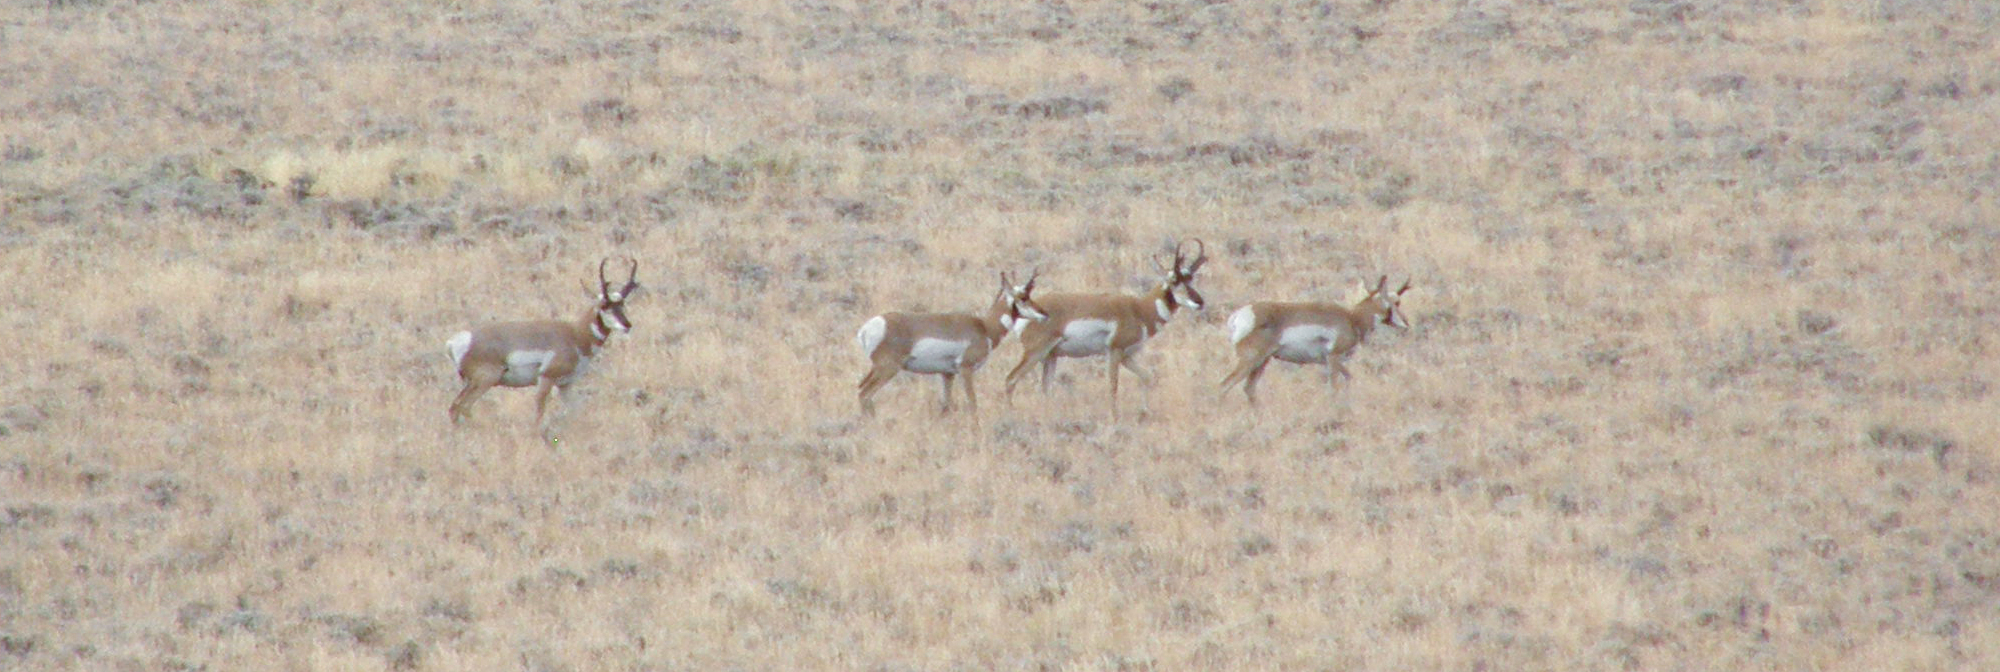 Herd of Antelope on an archery hunt.